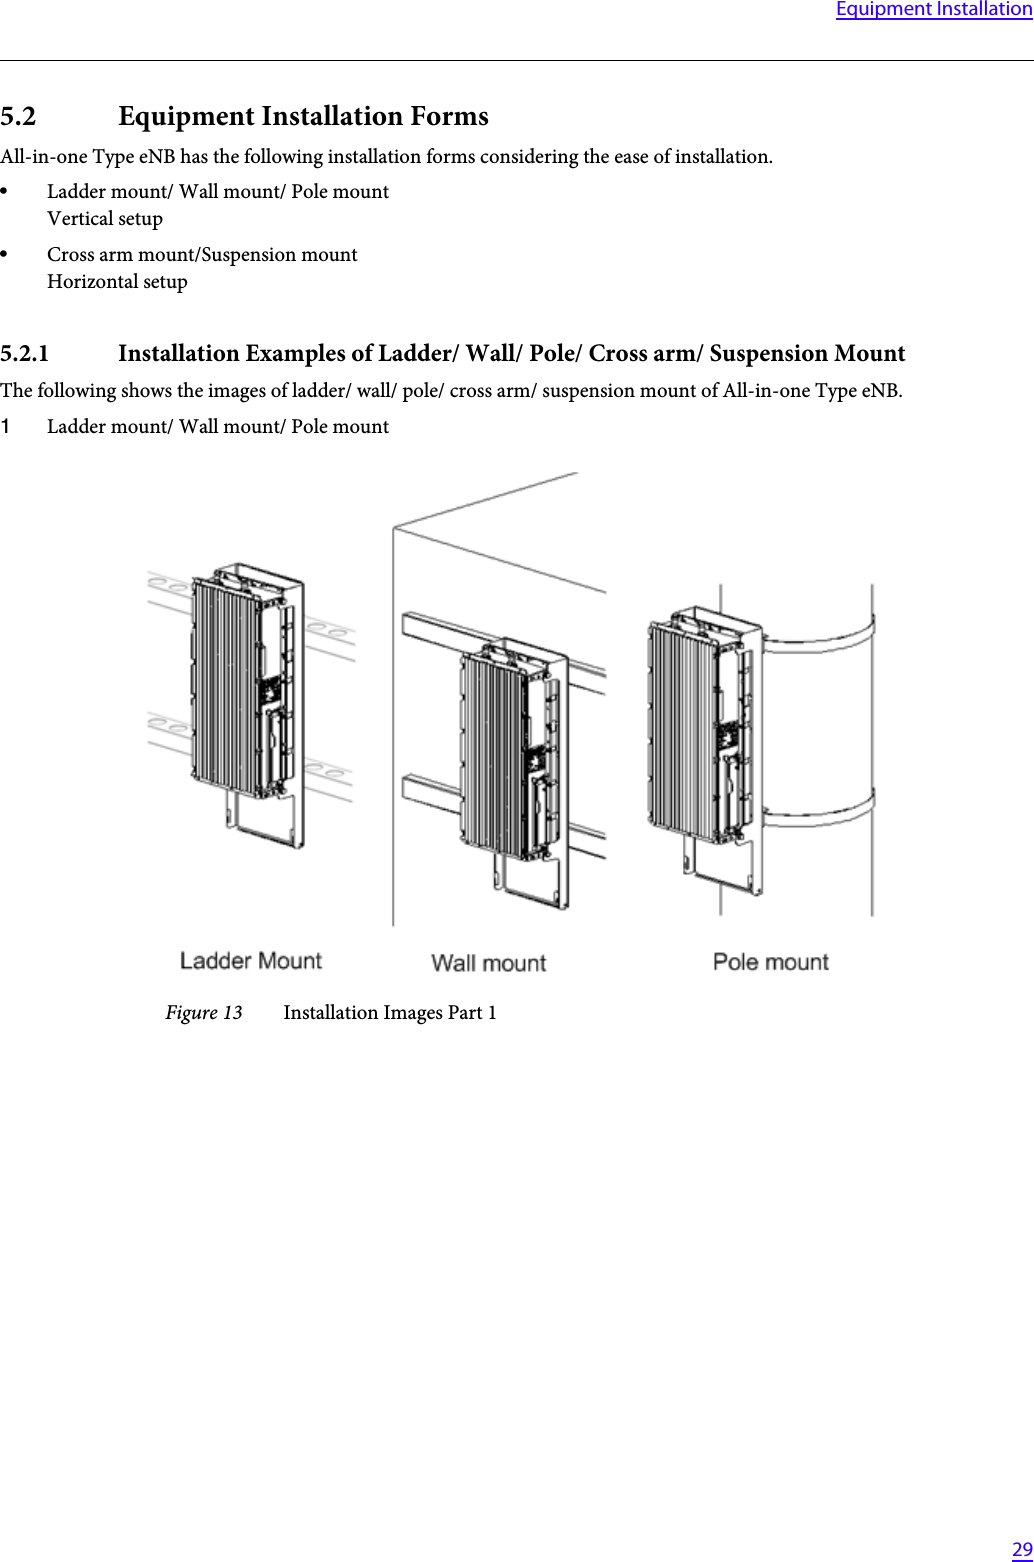   29Equipment Installation5.2 Equipment Installation FormsAll-in-one Type eNB has the following installation forms considering the ease of installation.•Ladder mount/ Wall mount/ Pole mountVertical setup•Cross arm mount/Suspension mountHorizontal setup5.2.1 Installation Examples of Ladder/ Wall/ Pole/ Cross arm/ Suspension MountThe following shows the images of ladder/ wall/ pole/ cross arm/ suspension mount of All-in-one Type eNB.1Ladder mount/ Wall mount/ Pole mountFigure 13 Installation Images Part 1